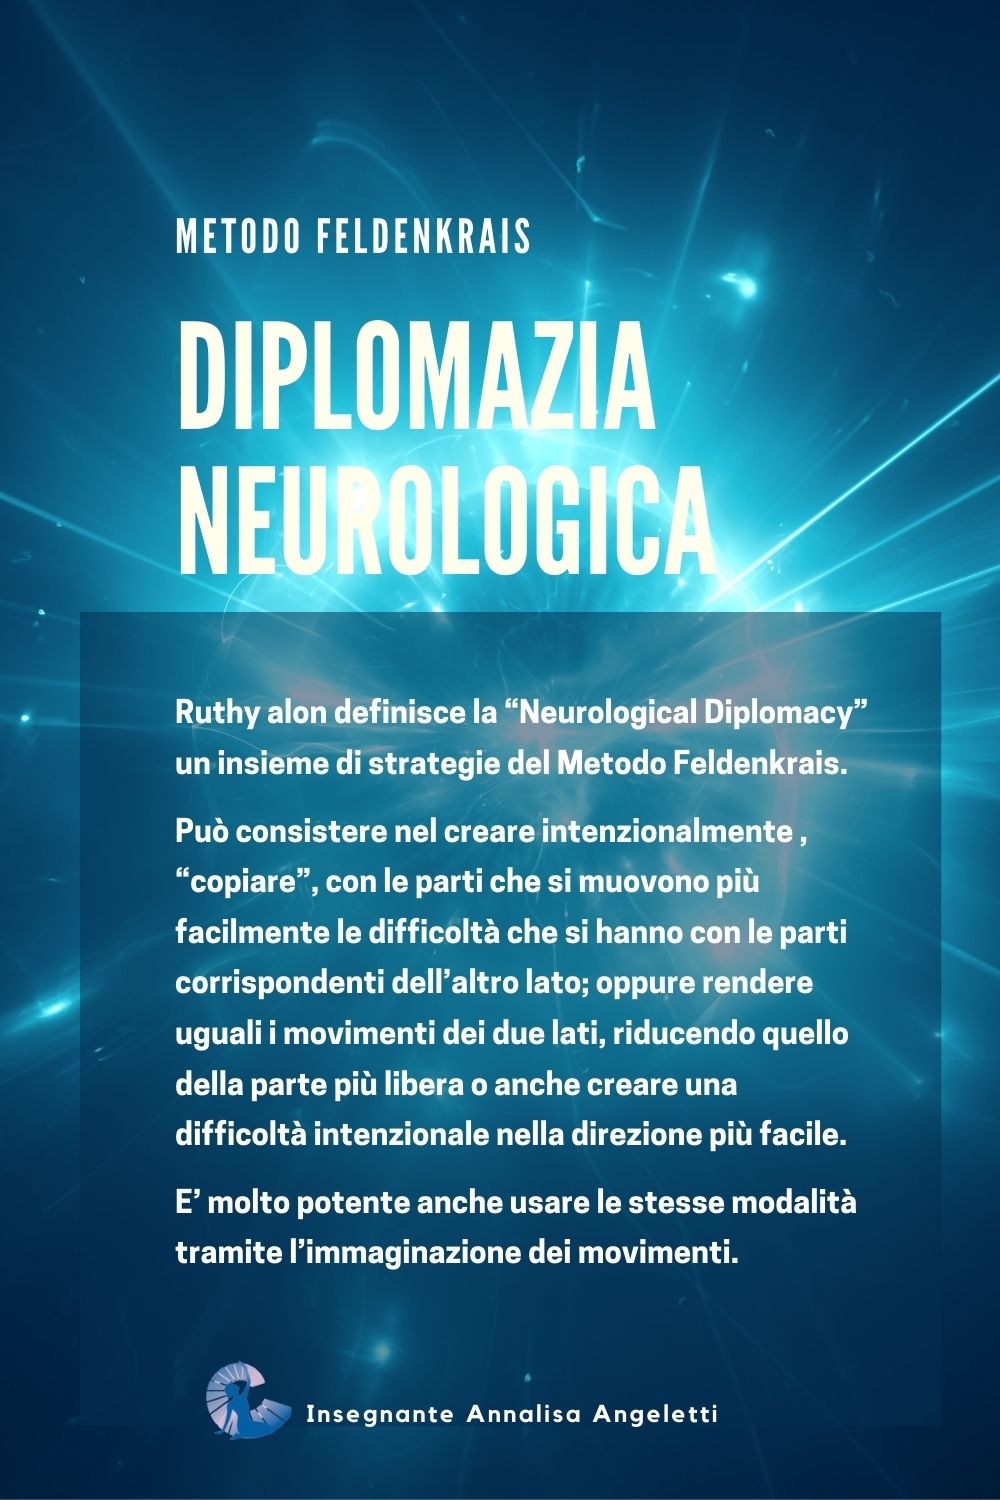 Ruthy alon definisce la “Neurological Diplomacy”